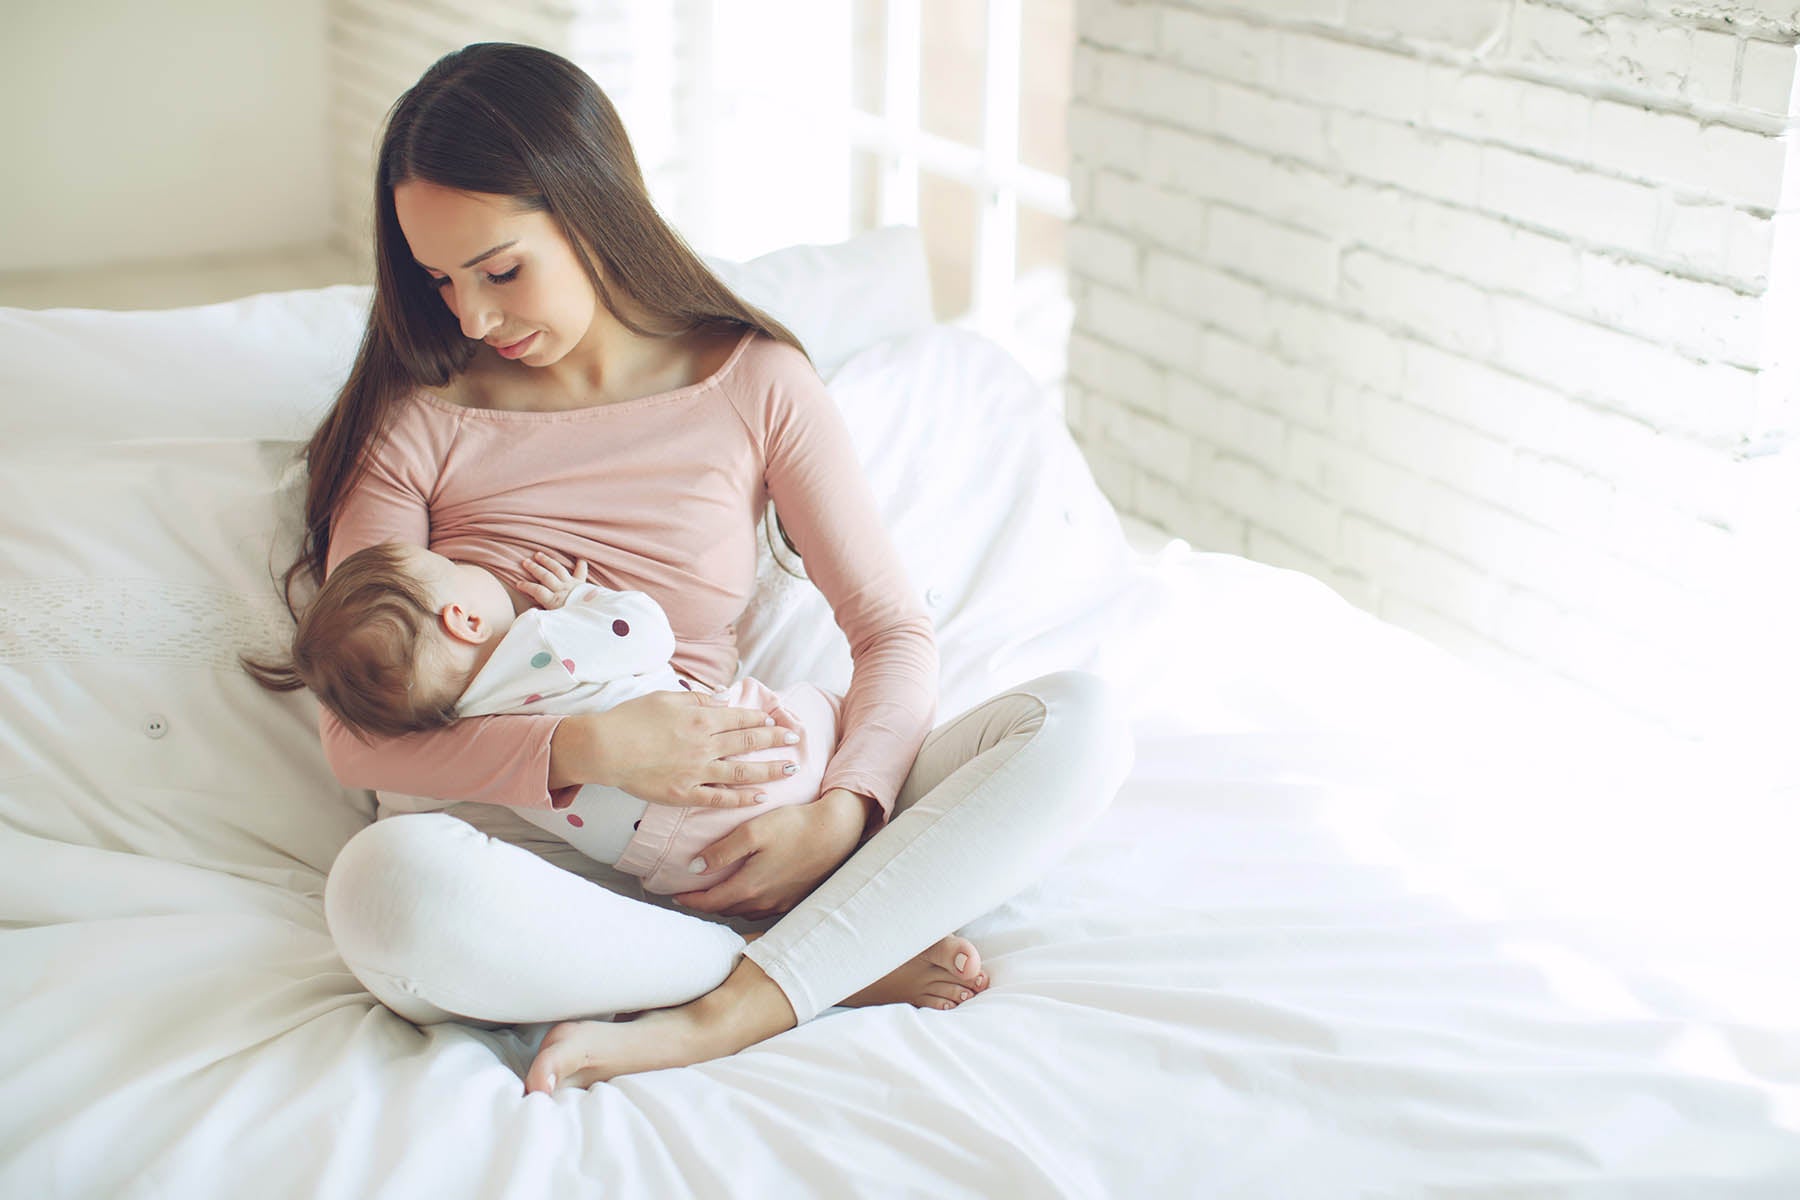 Six Common Breastfeeding Worries for New Moms